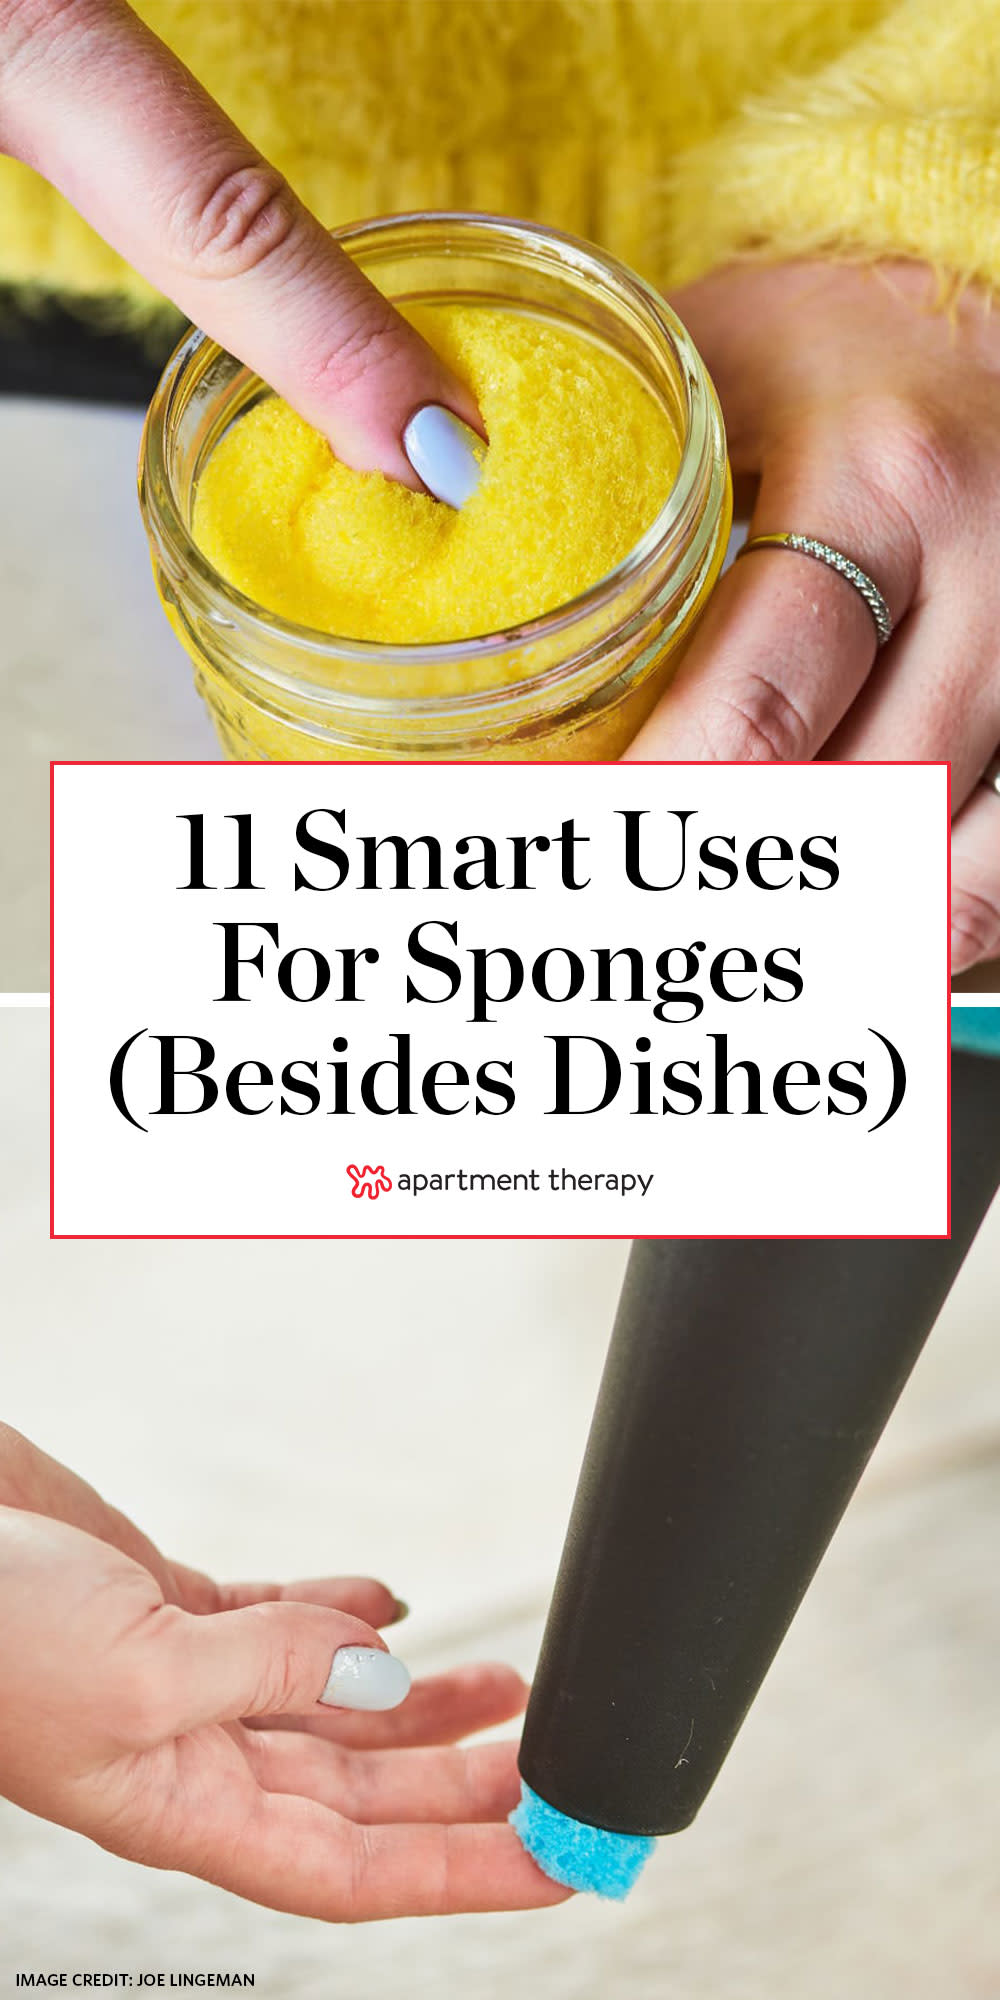 Surprising Ways to Use Kitchen Sponges